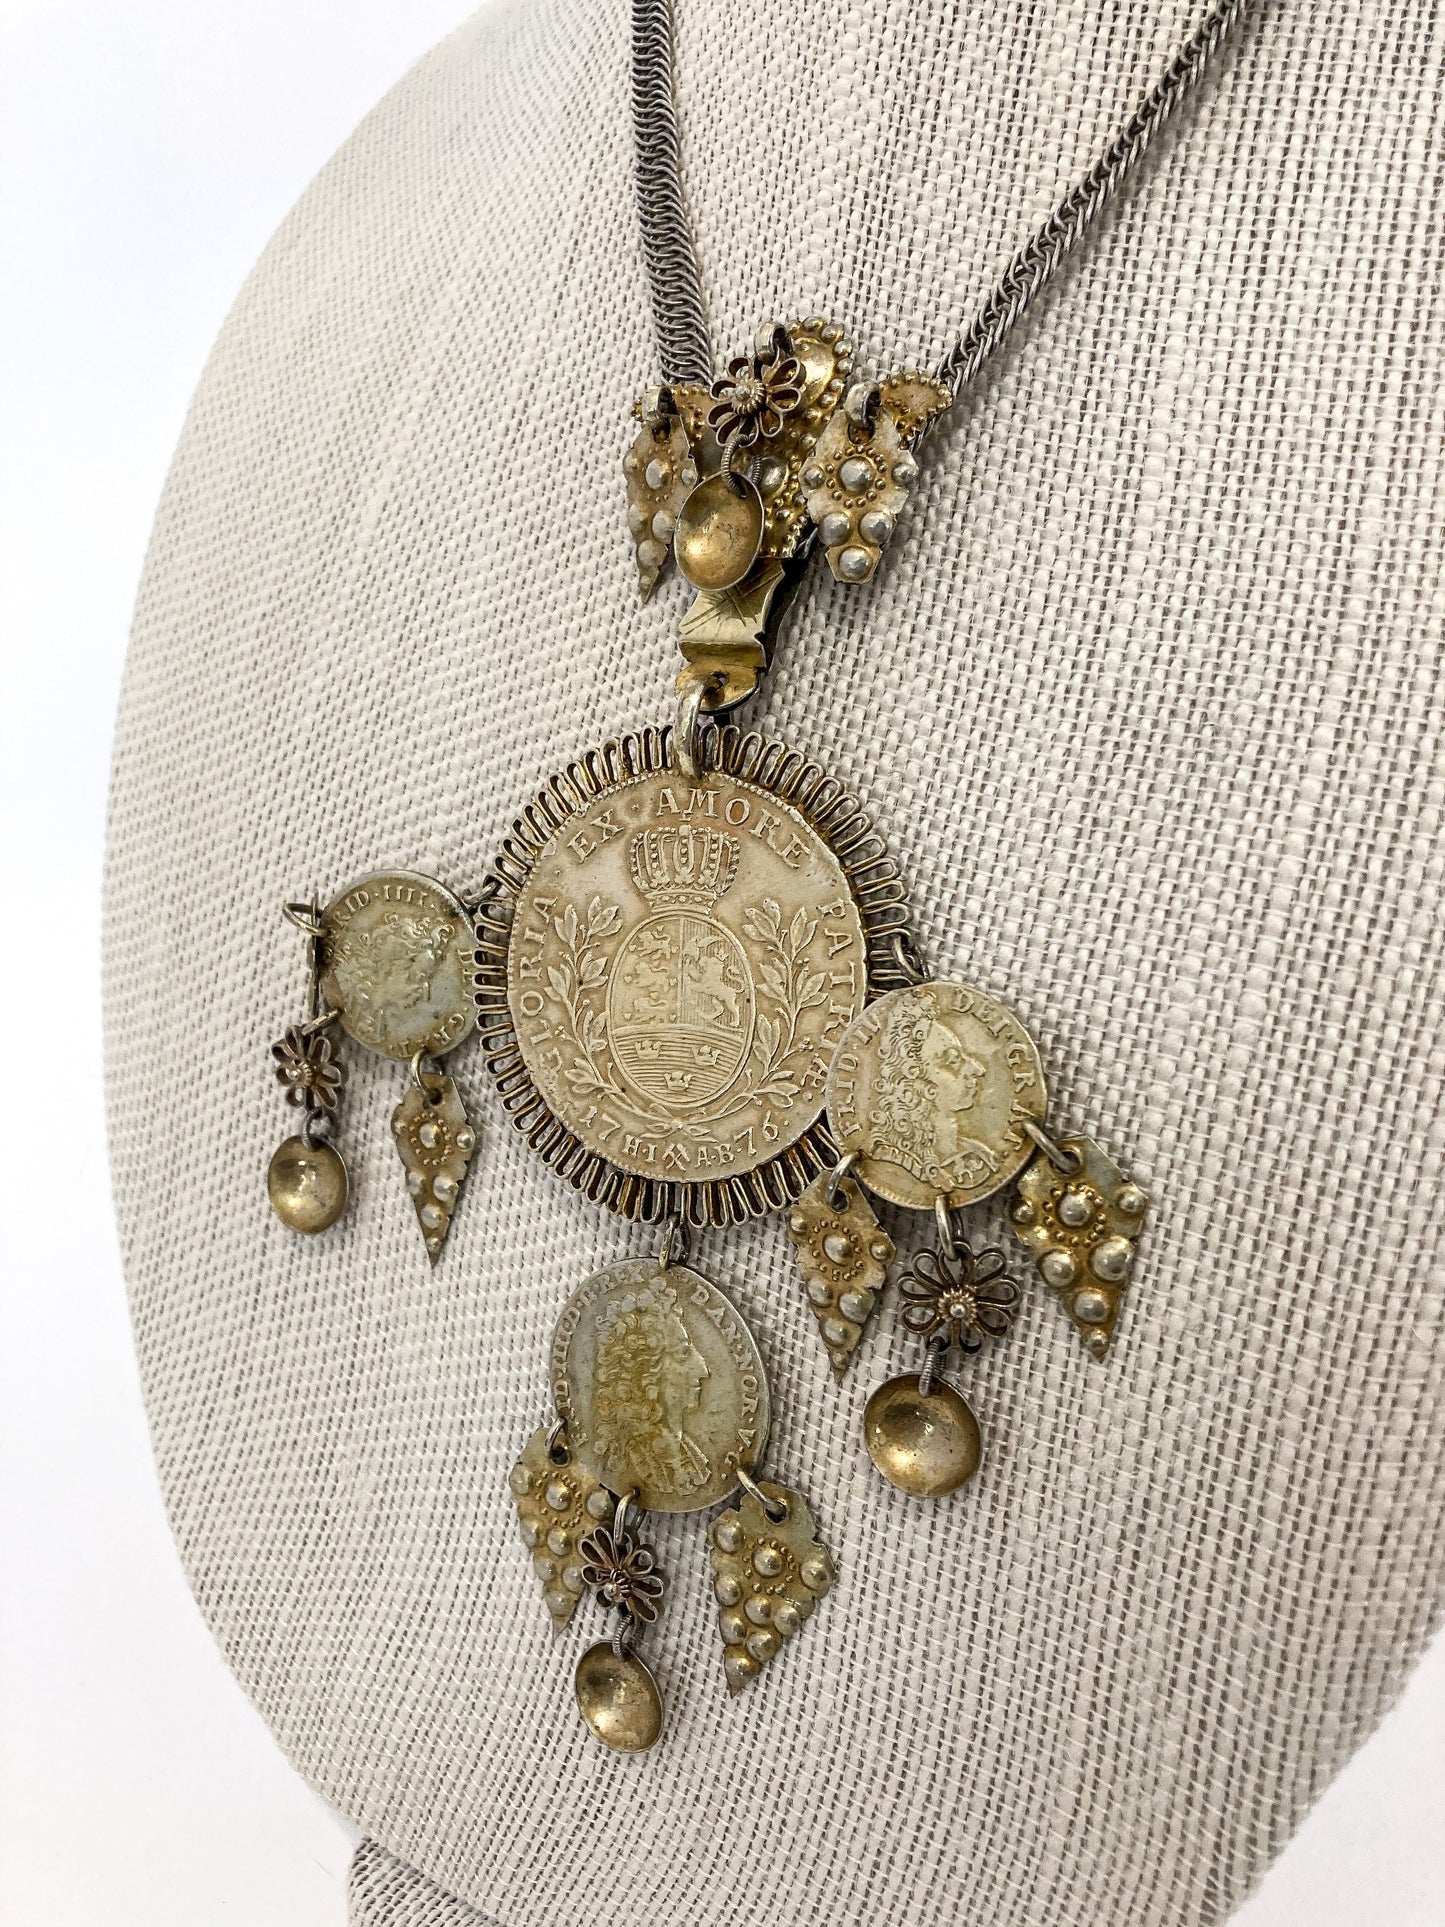 Vintage 1970s Antique Denmark Coins Silver Gold Toned Pendant Necklace Close Up